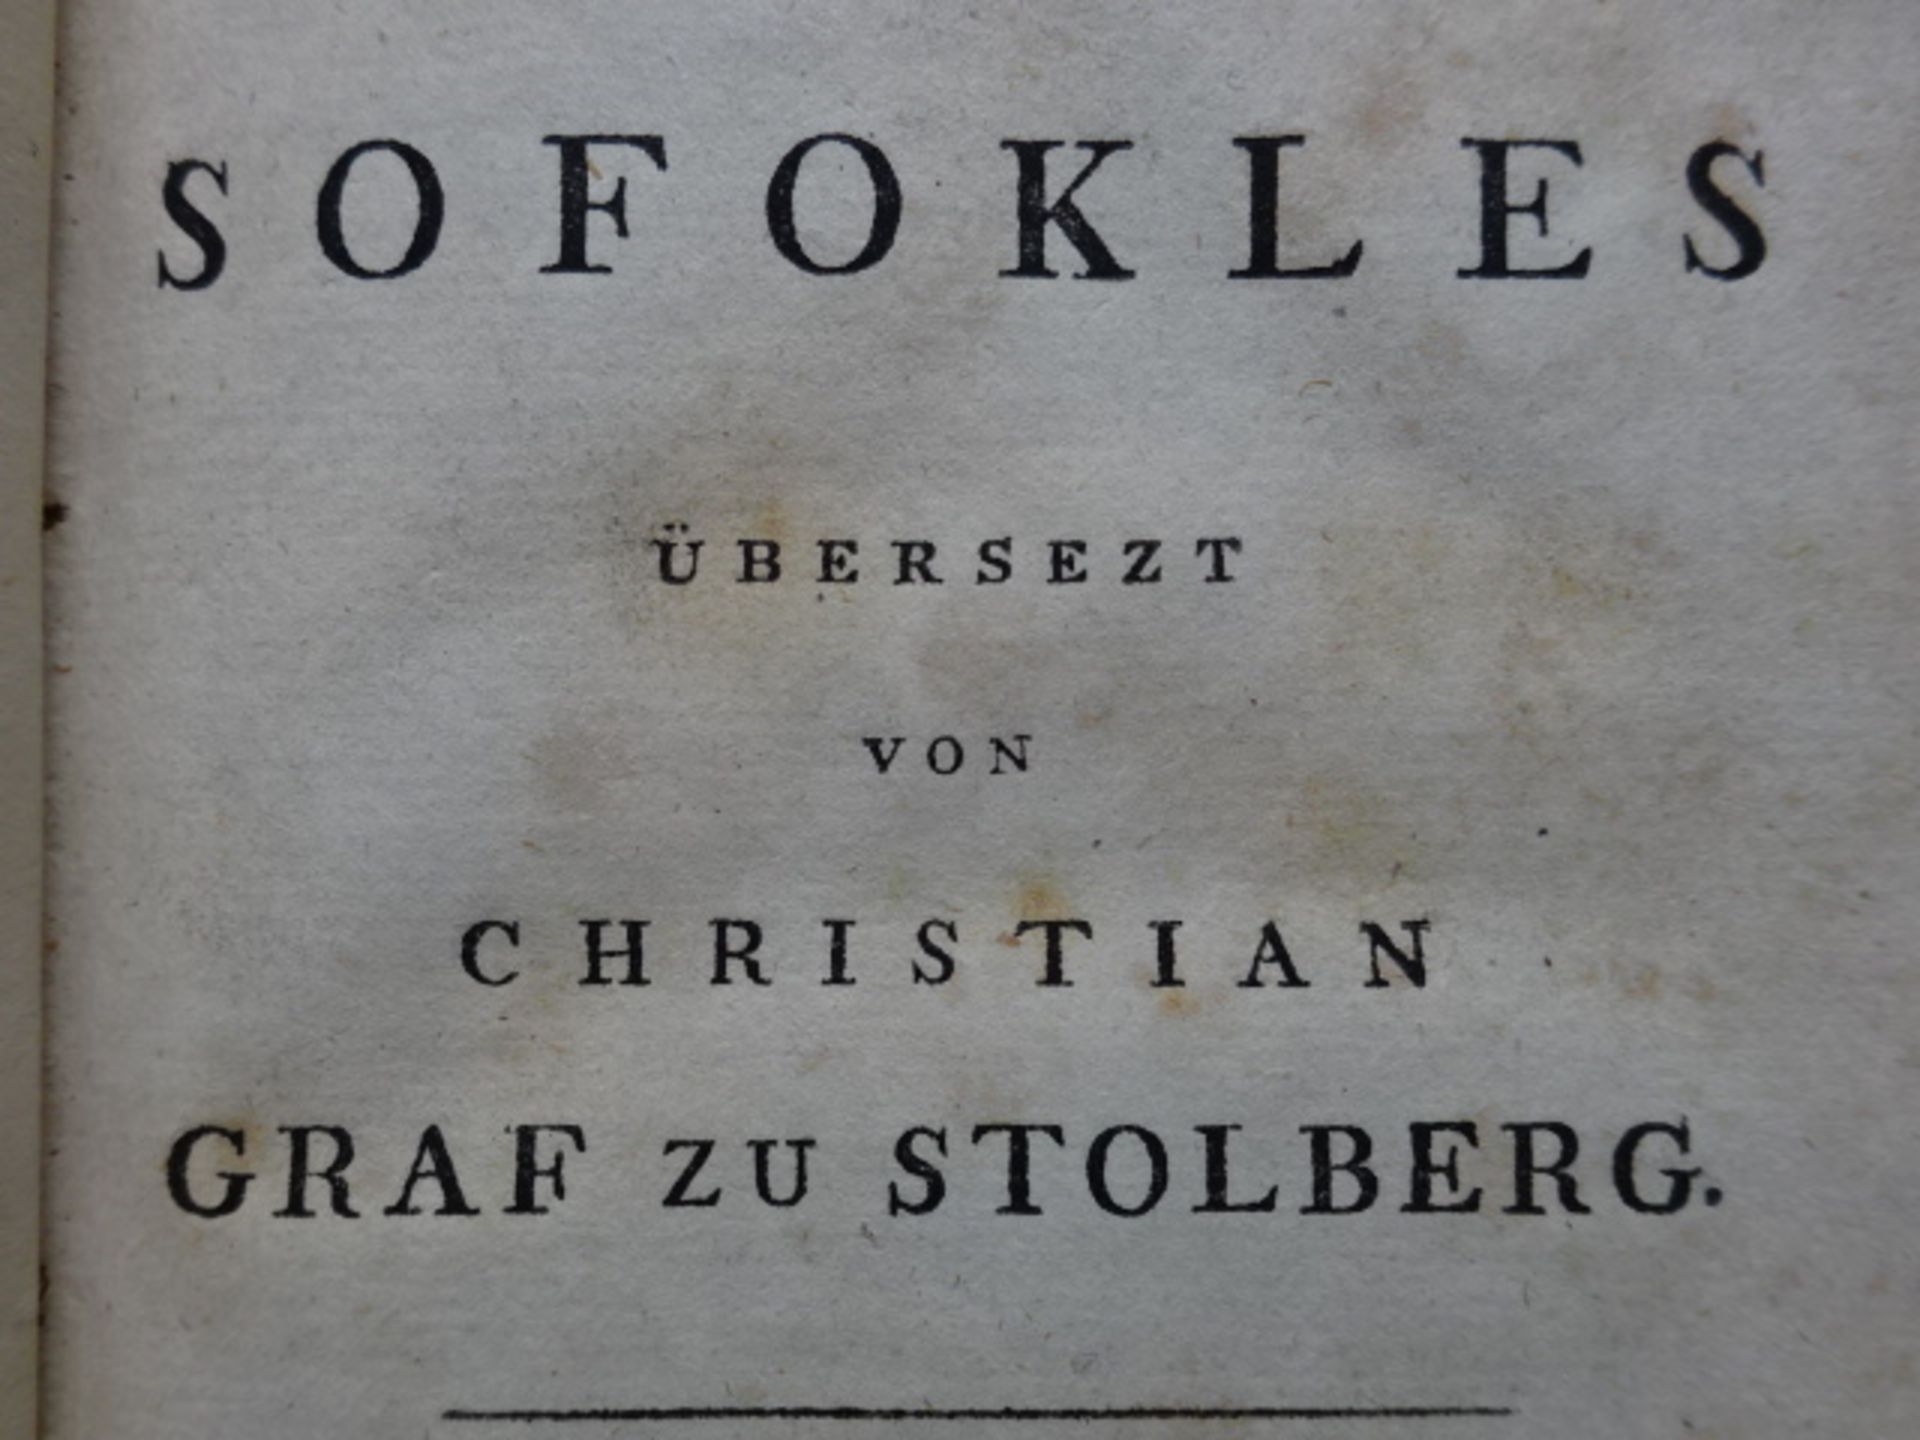 Stolberg - Sofokles 2 Bde.